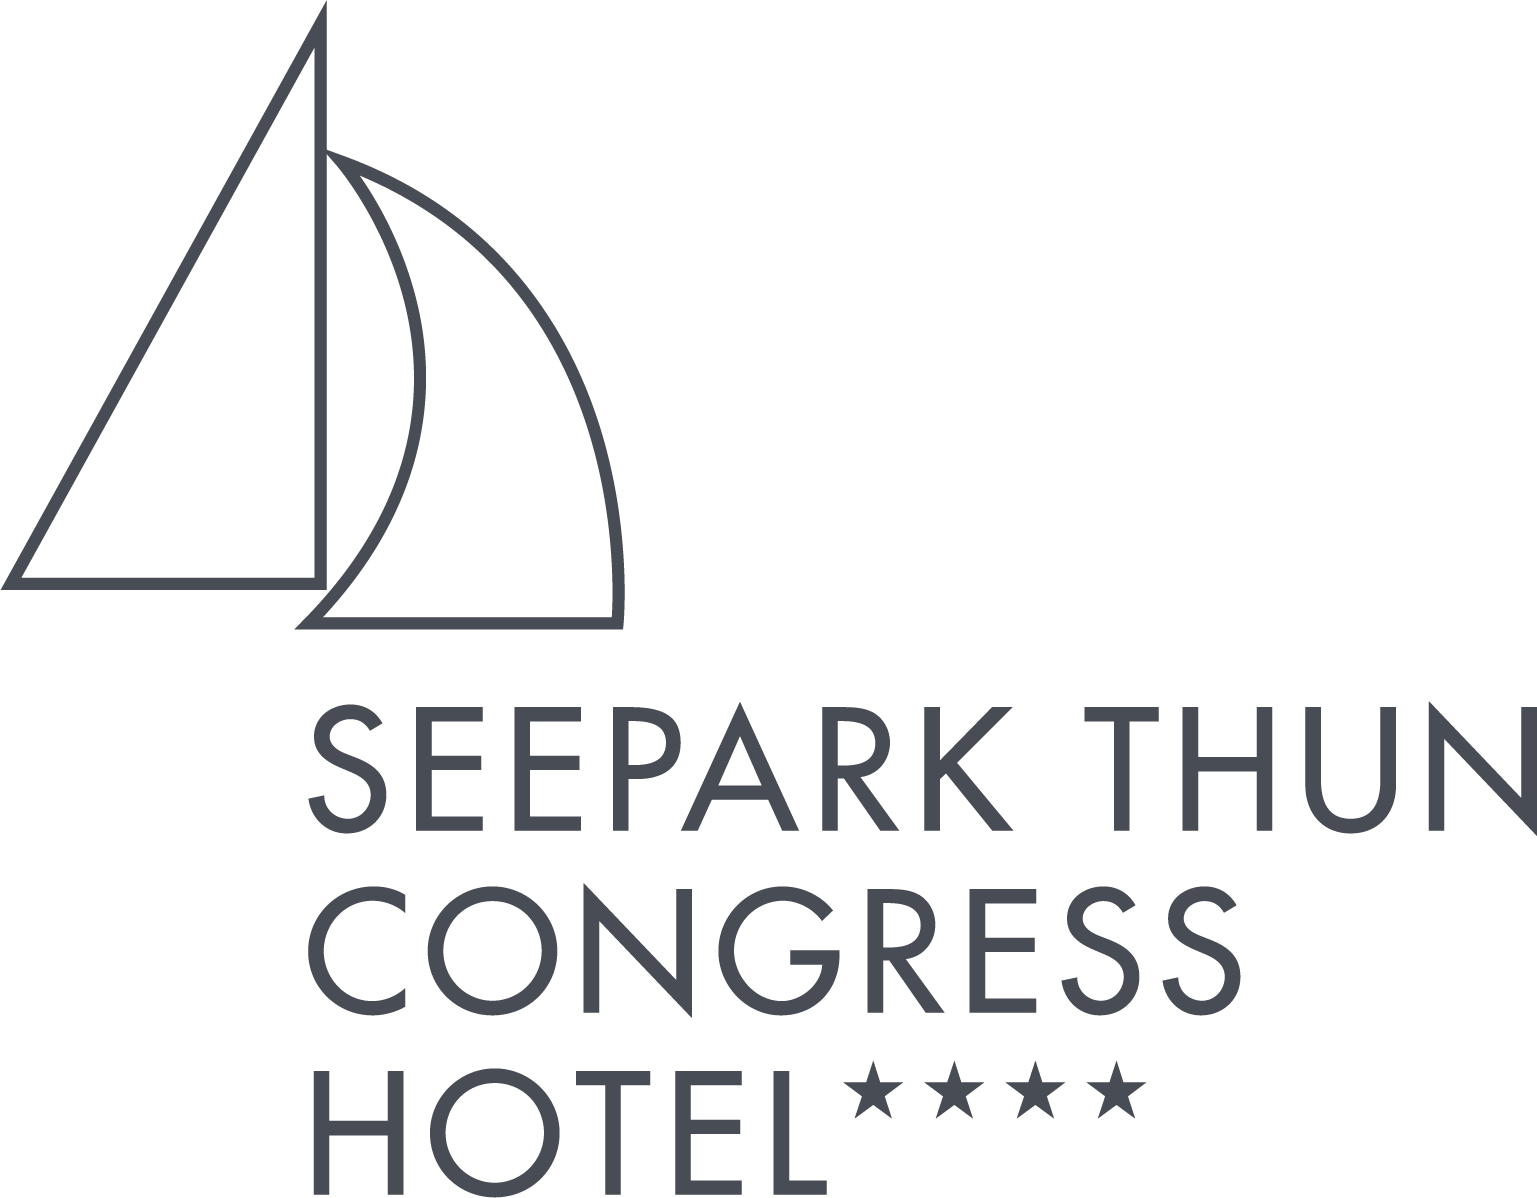 Congress Hotel Seepark Thun